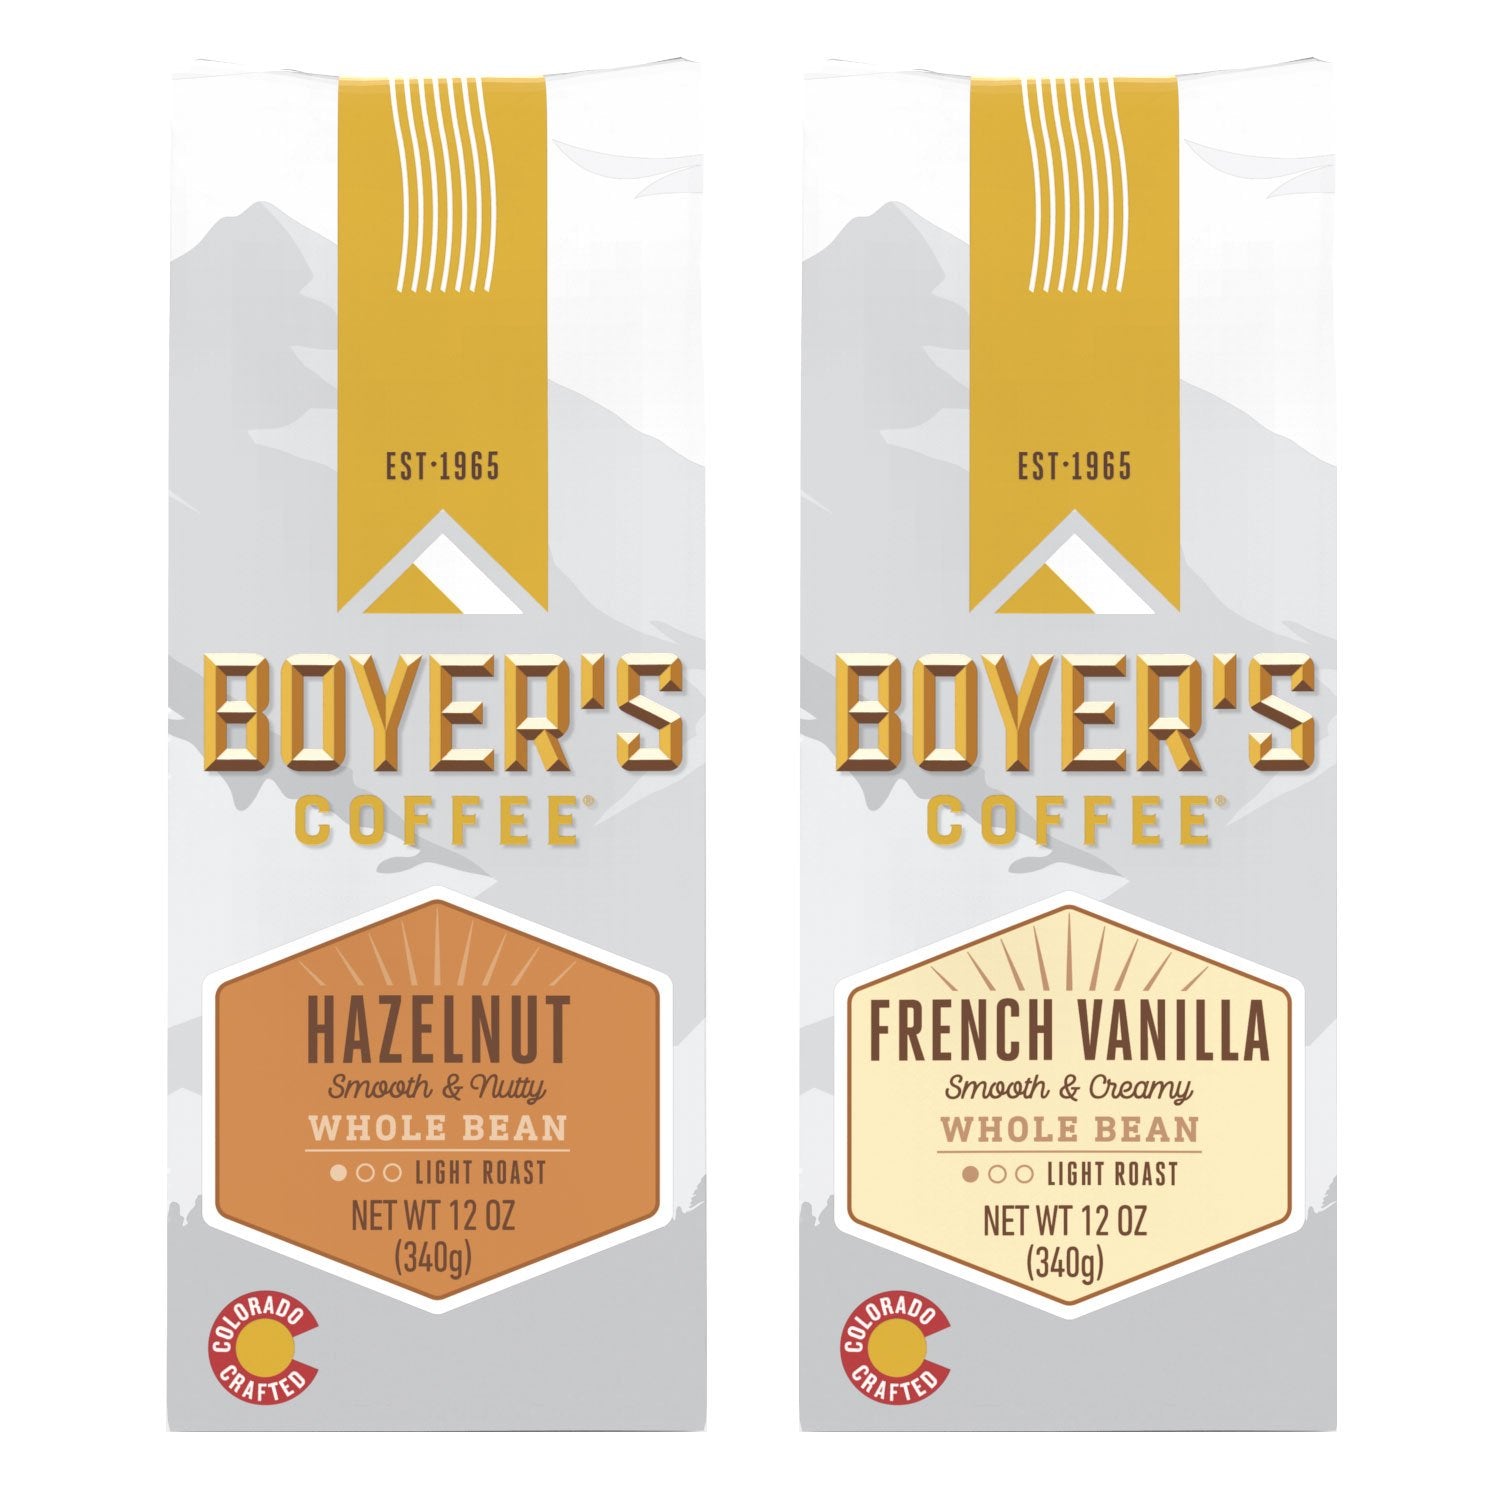 Hazelnut Flavored Coffee – Butler Beans Coffee